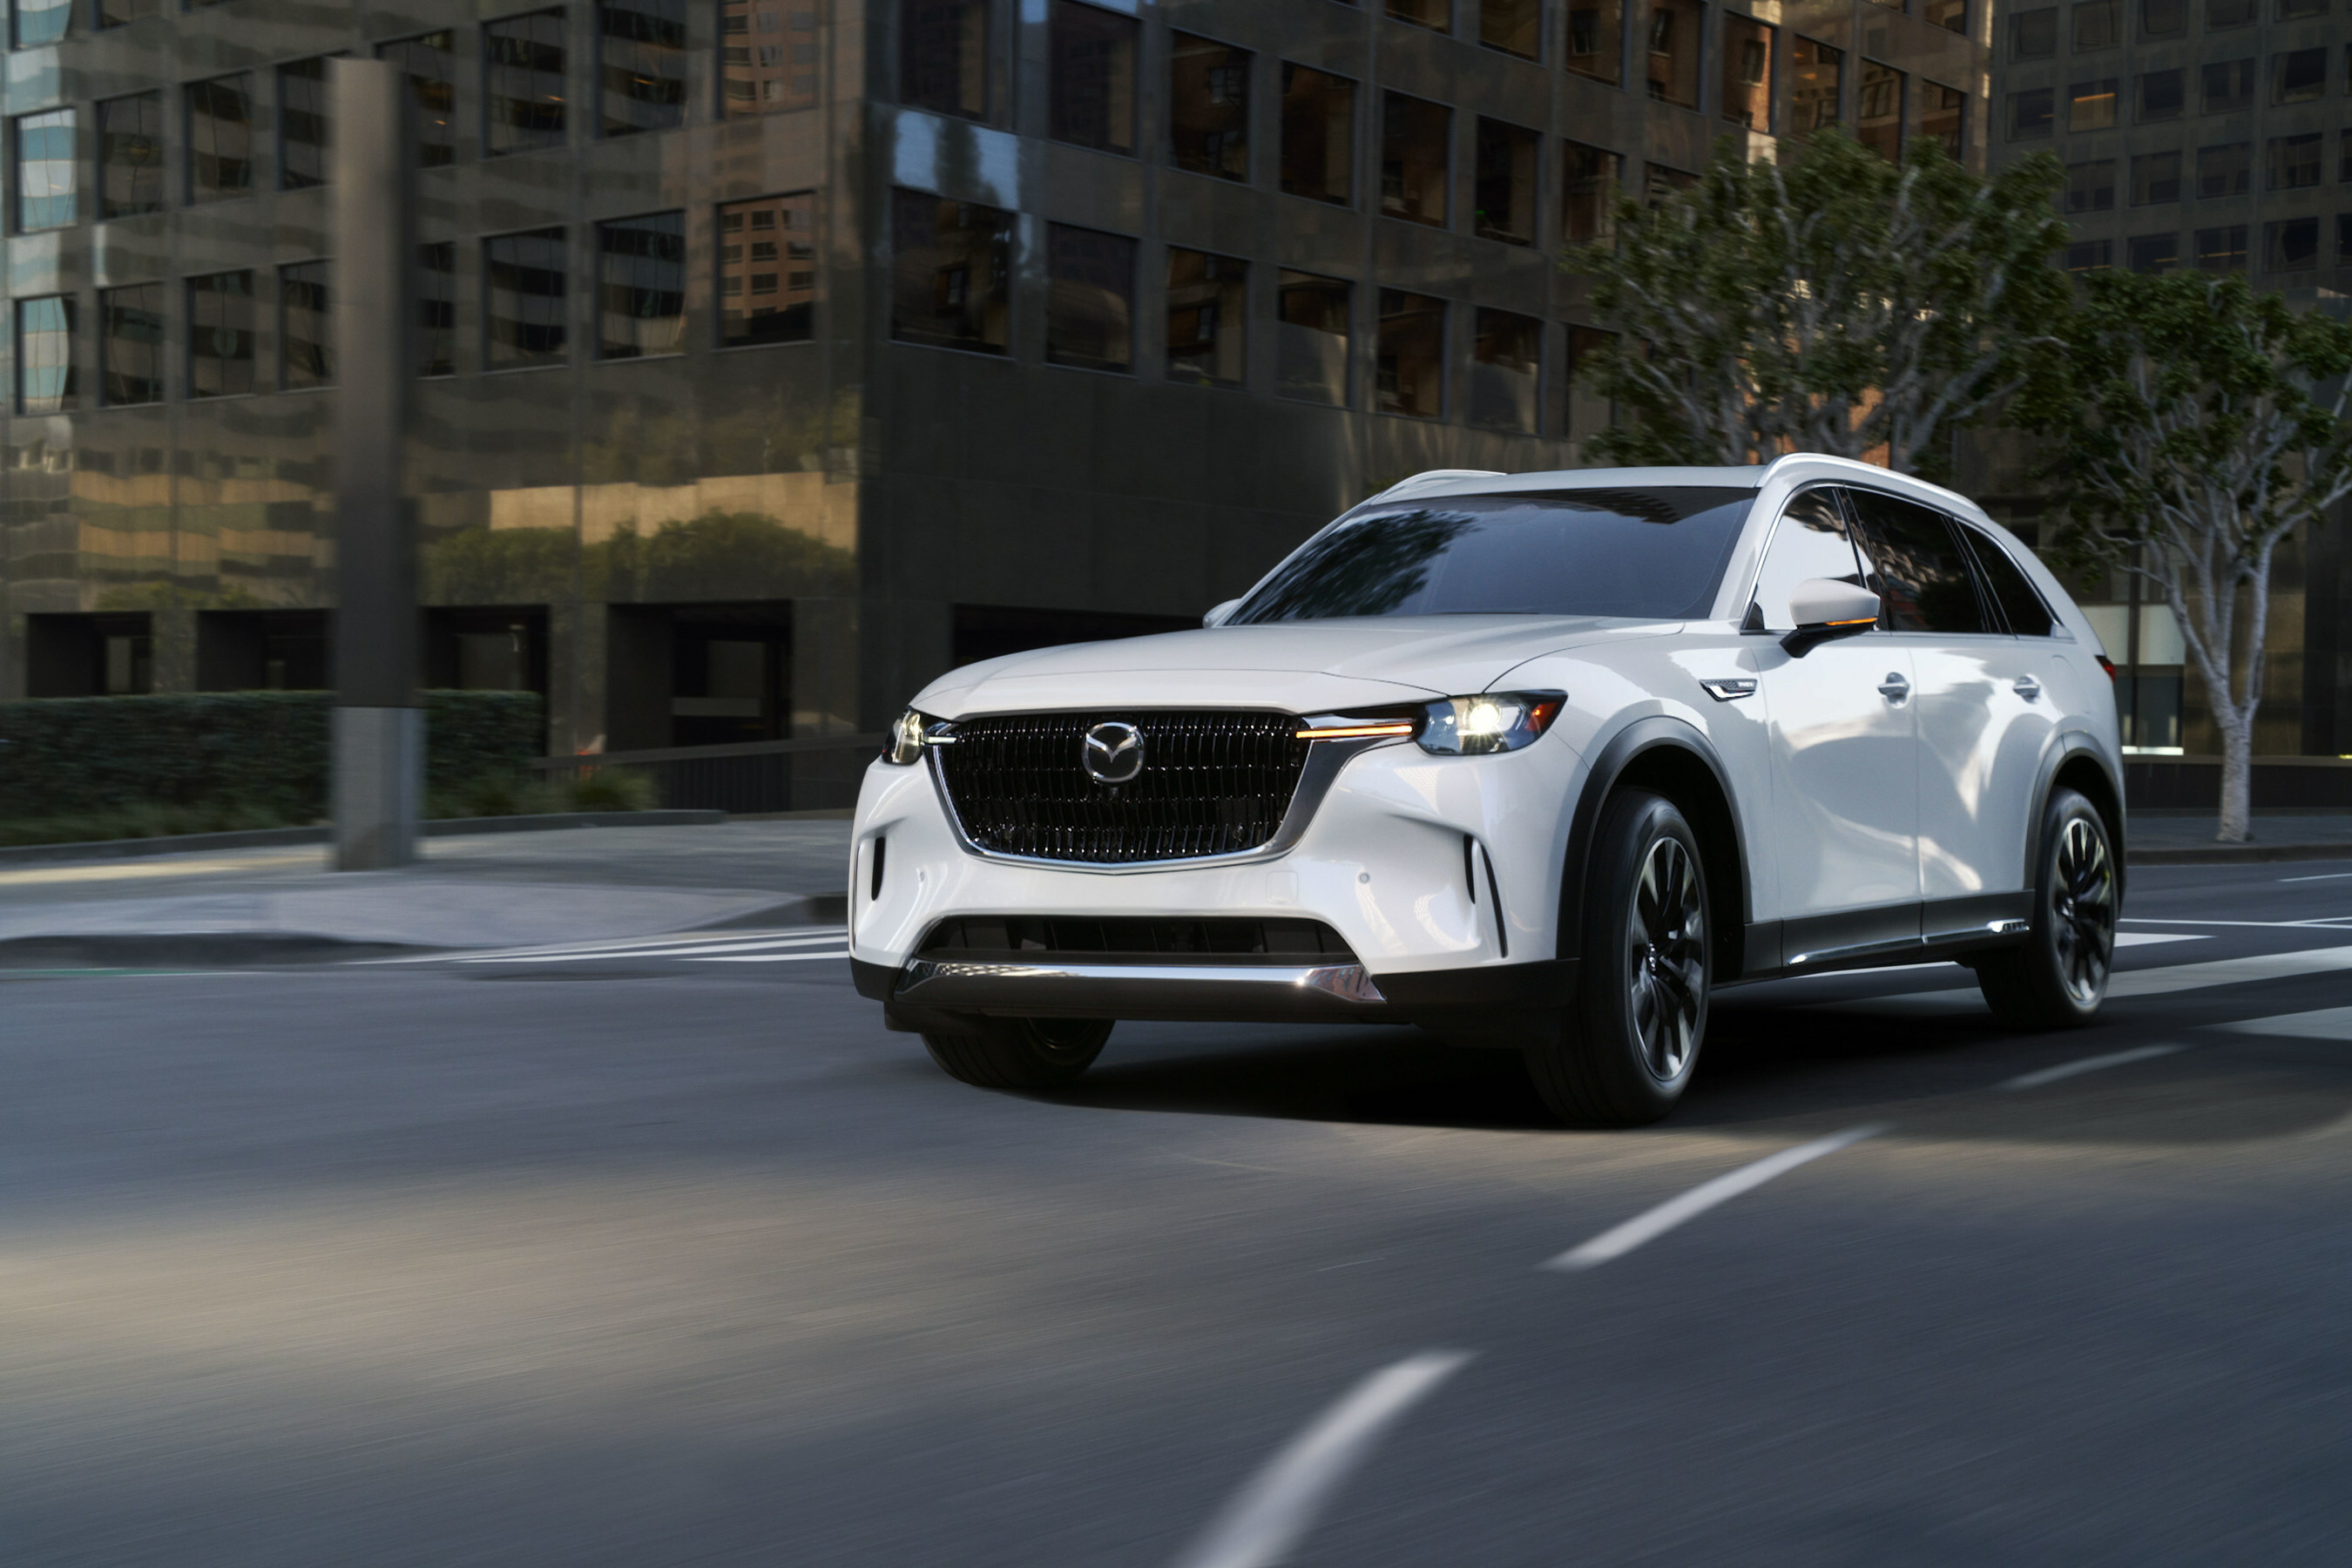 Mazda USA Newsroom - Vehicles